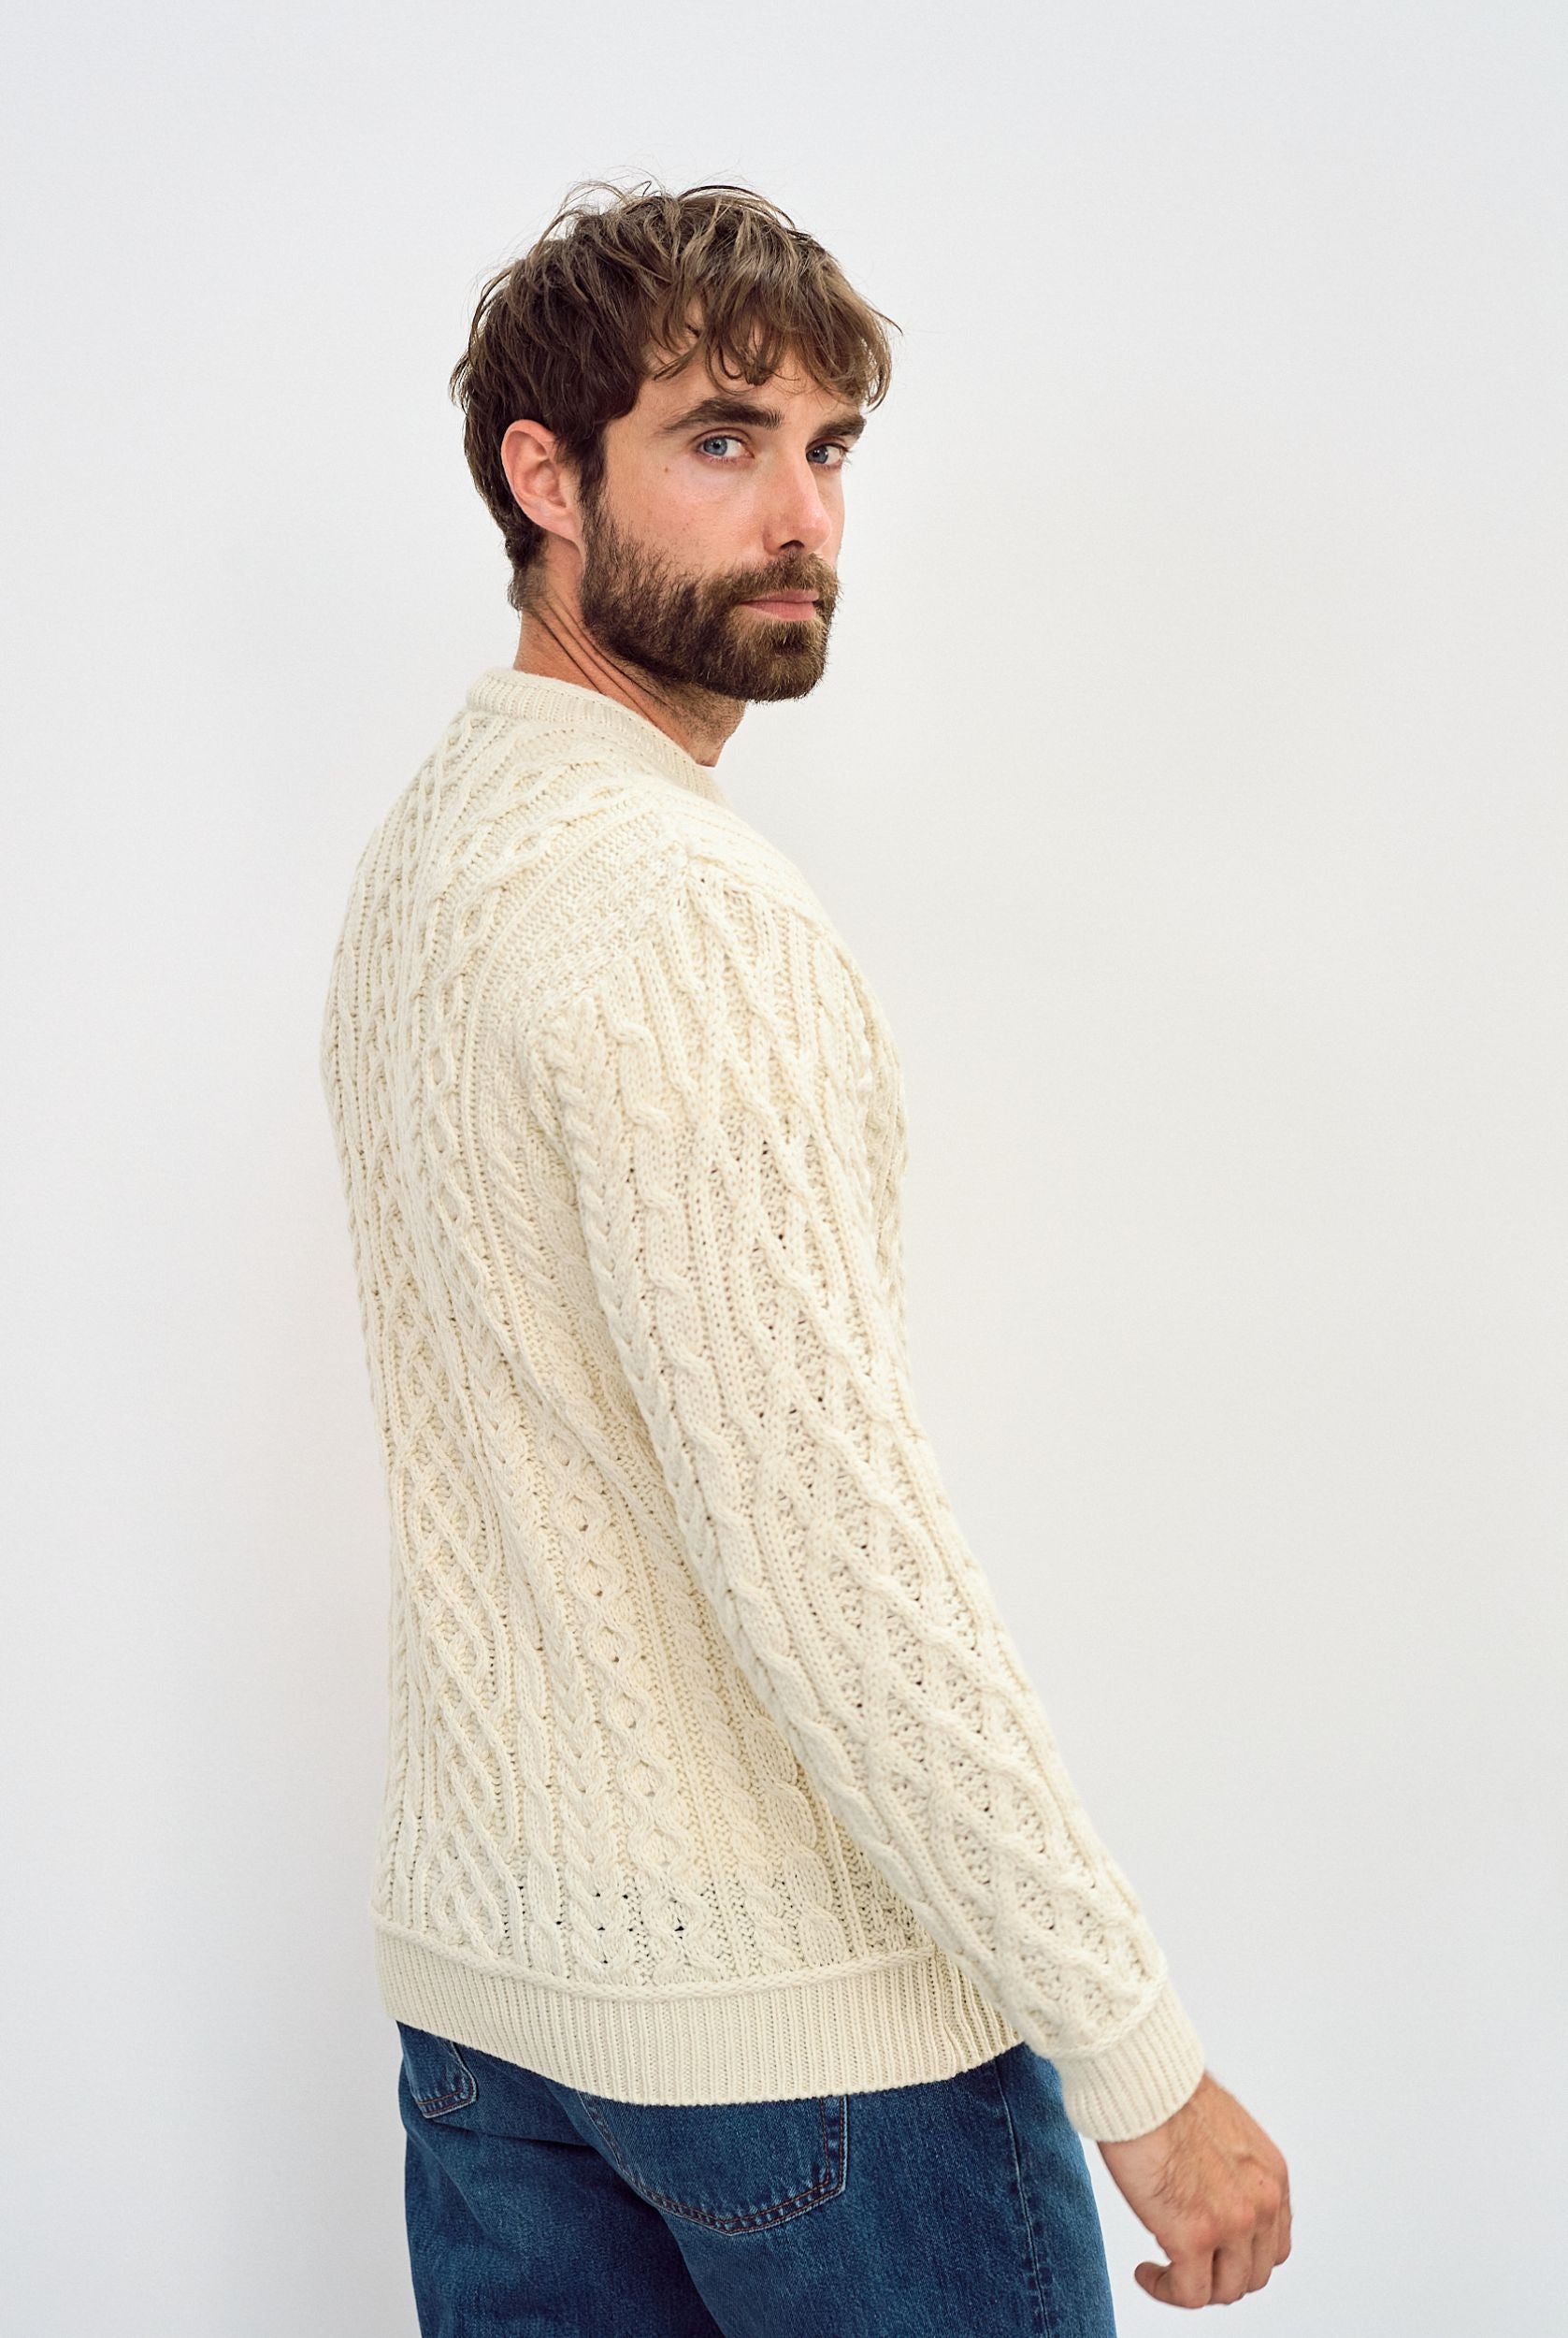 Inishturk Mens Aran Sweater - Cream | Aran Woollen Mills